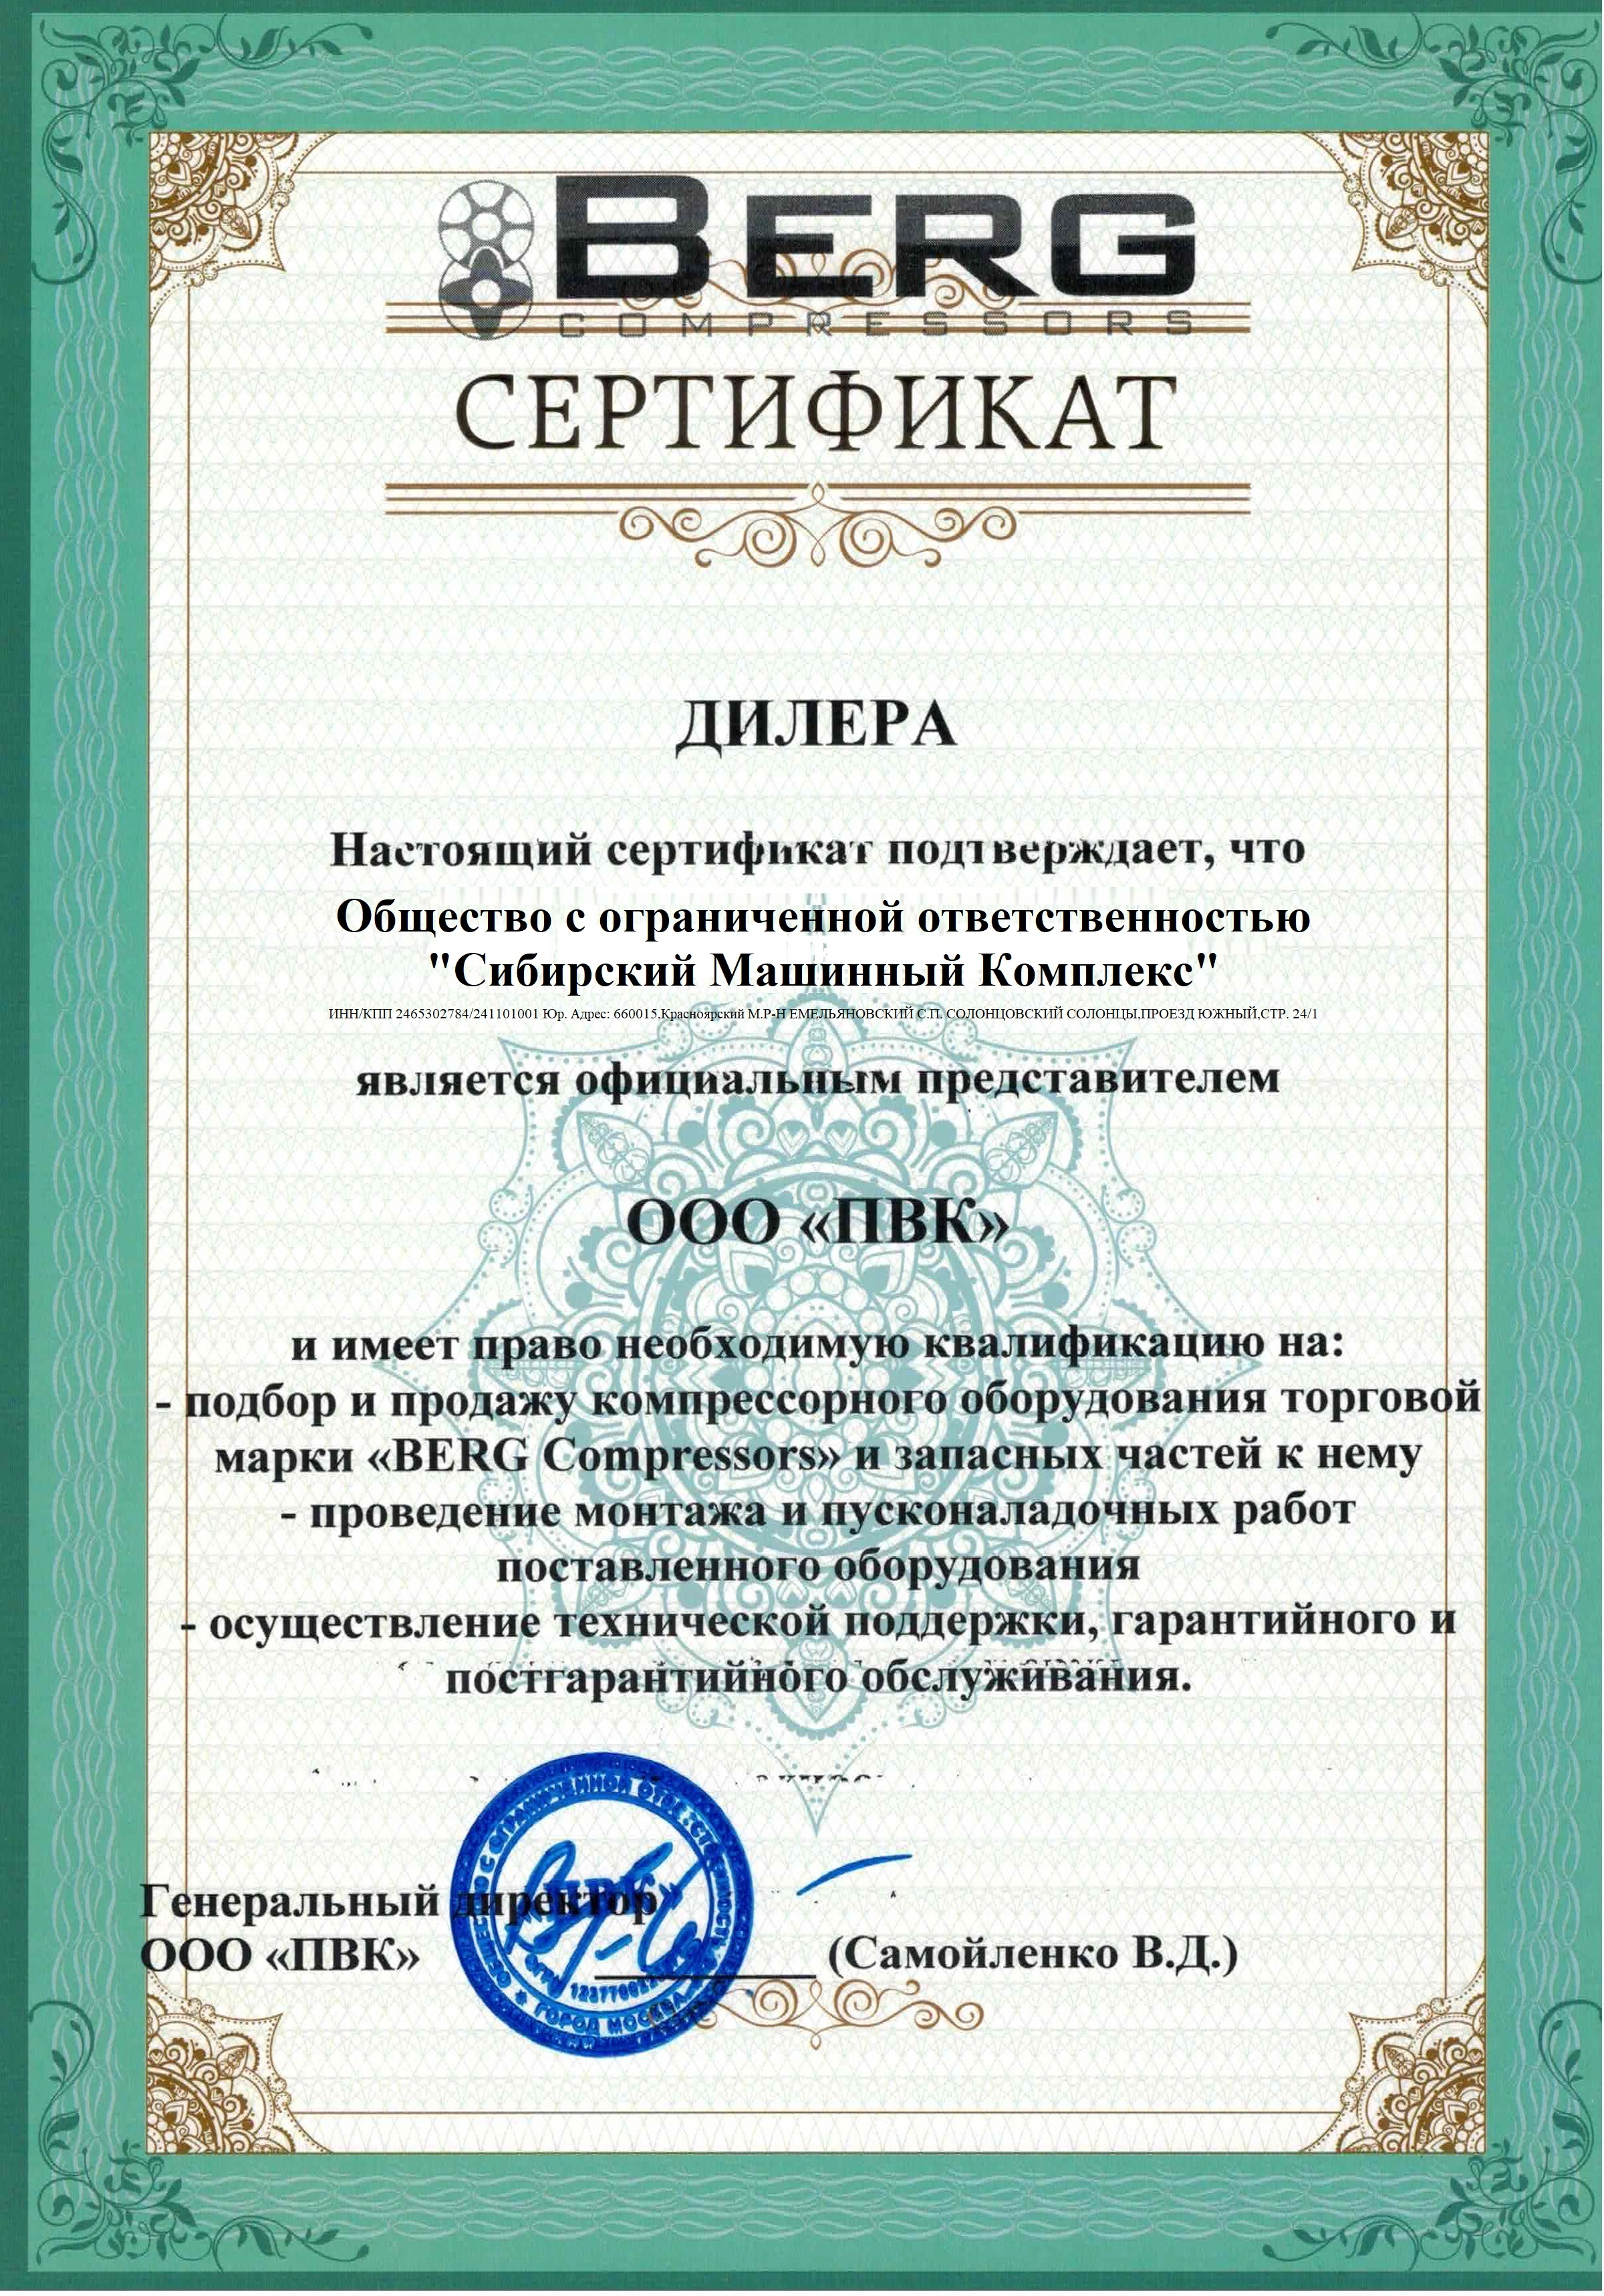 Сертификат Berg | ООО СМК